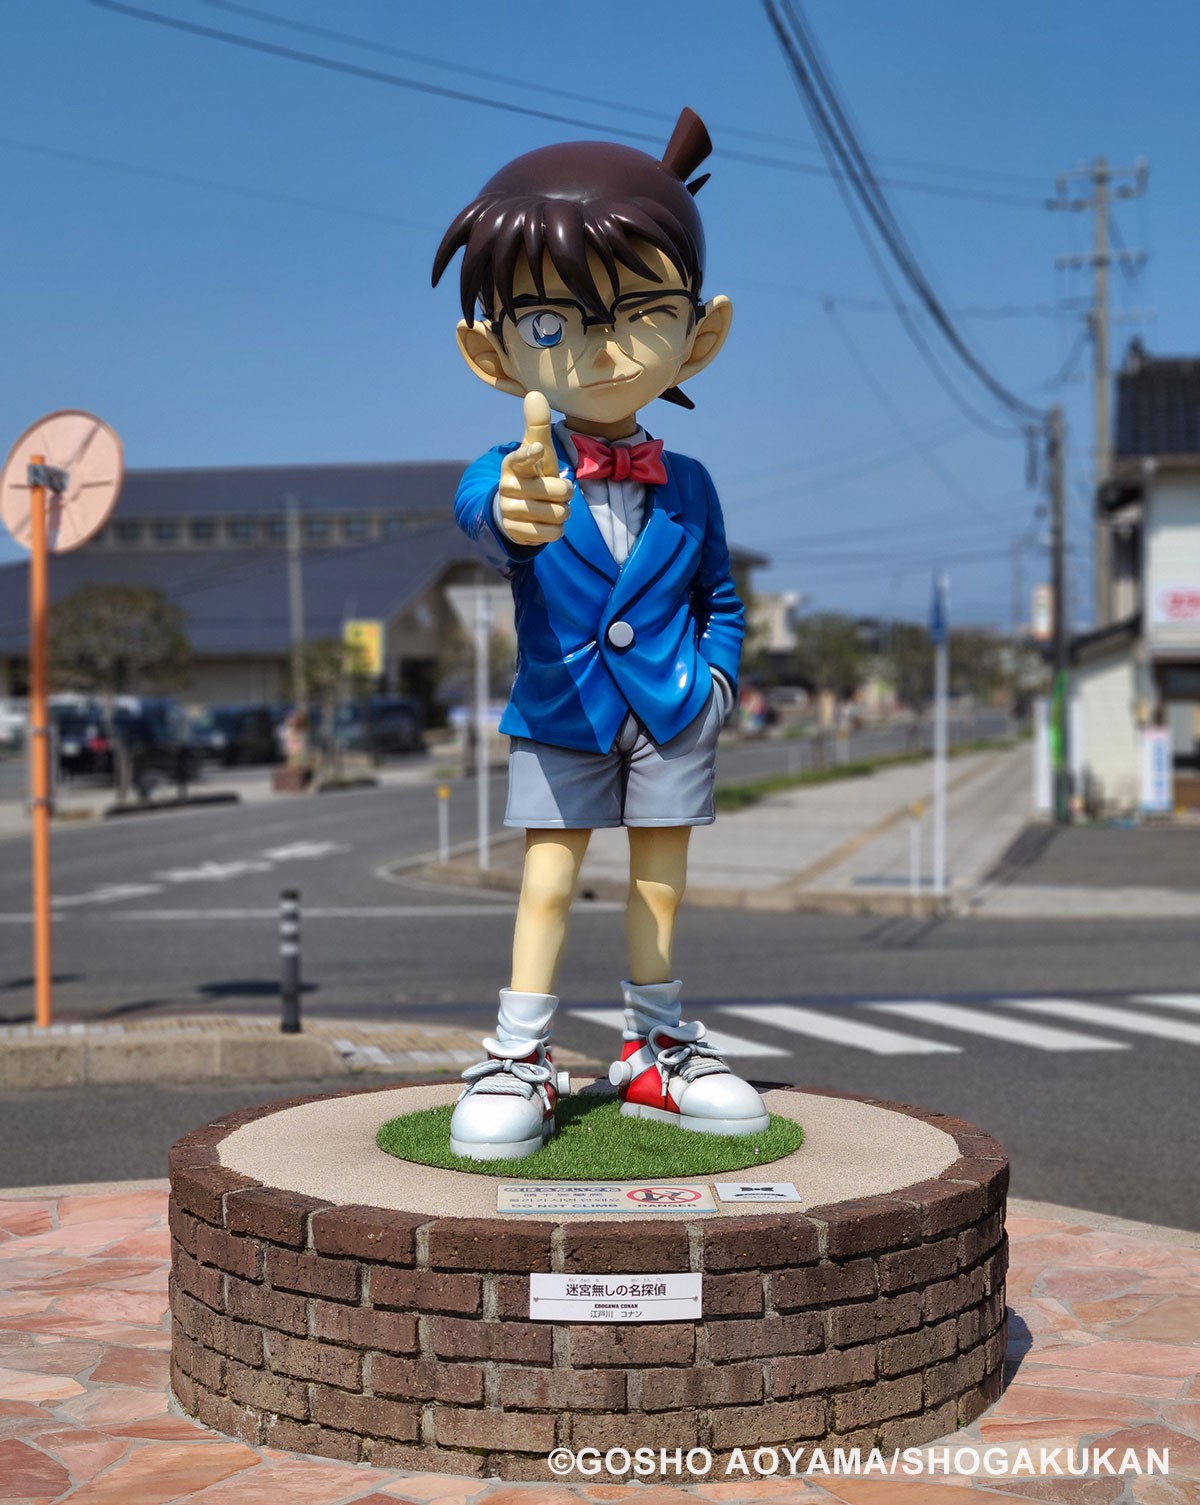 Spot where you can meet Conan - Tottori Hokuei Town Conan Street